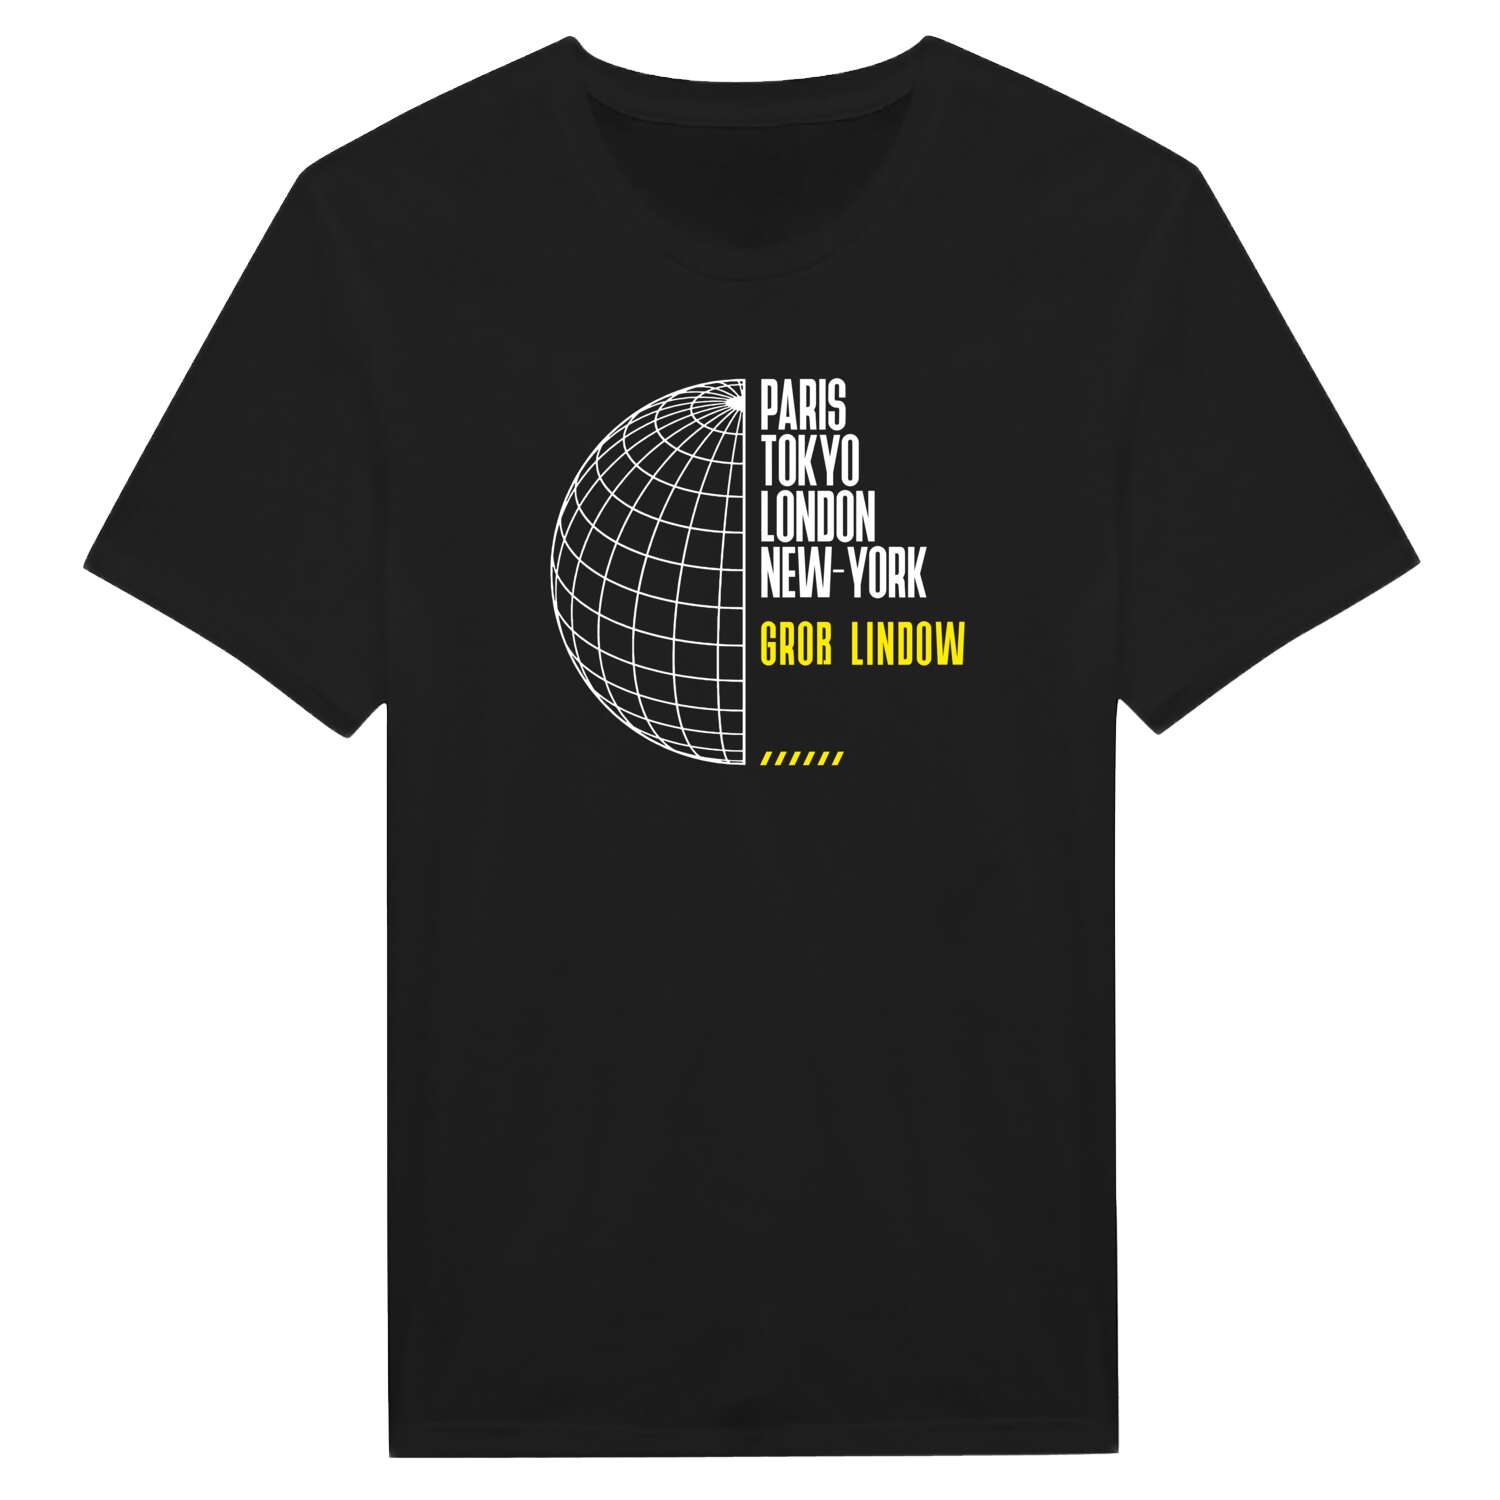 Groß Lindow T-Shirt »Paris Tokyo London«